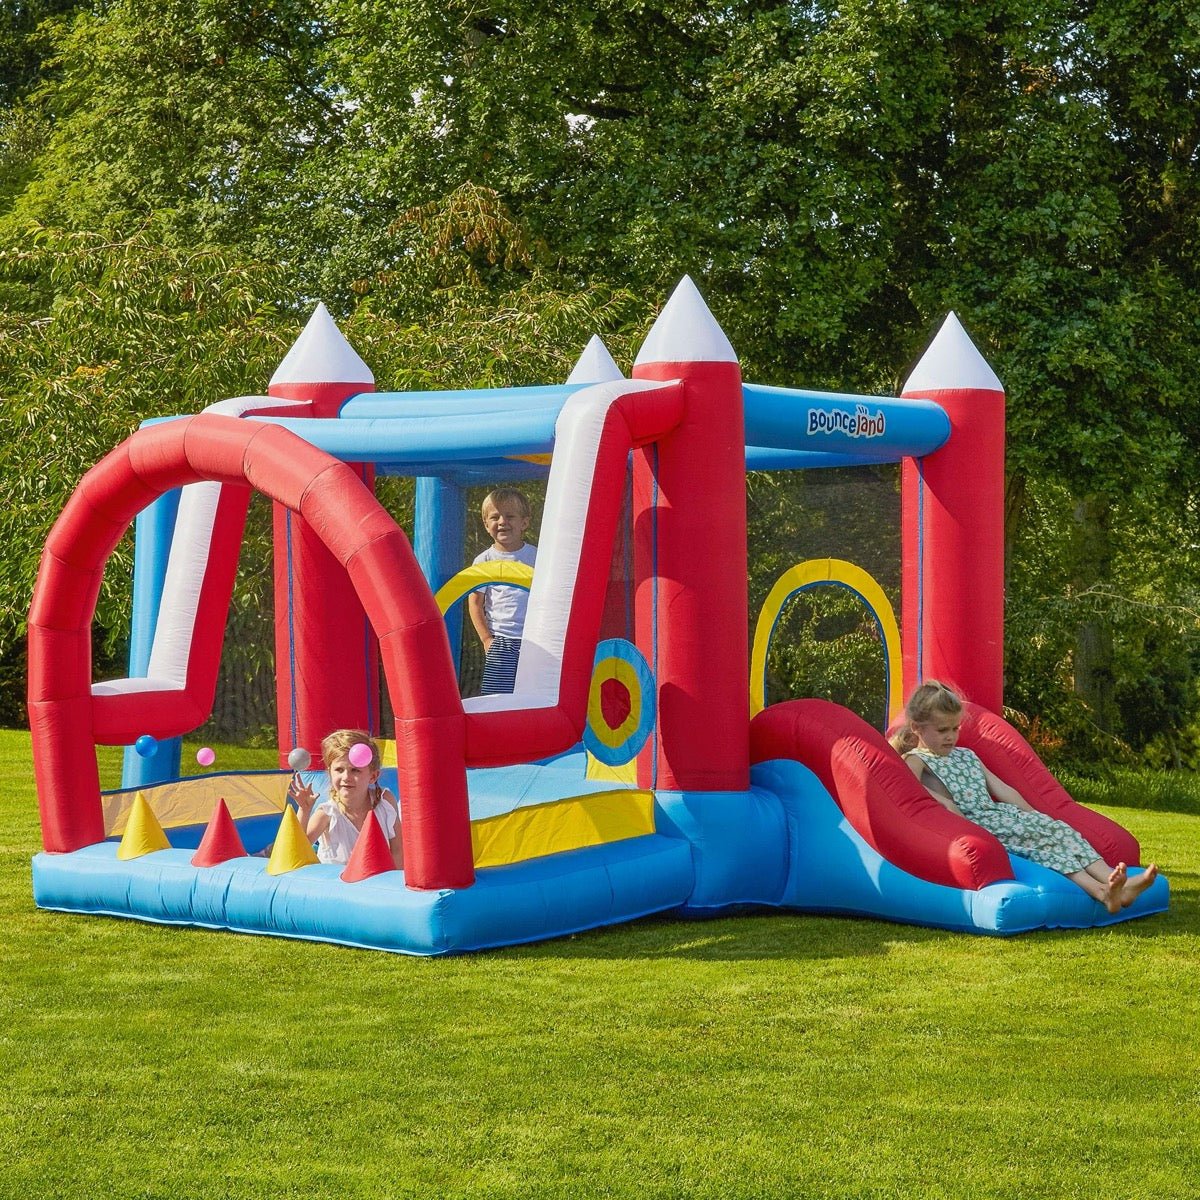 Bounceland inflatable Bouncy Castle with Blower - Classic Castle Activity Centre